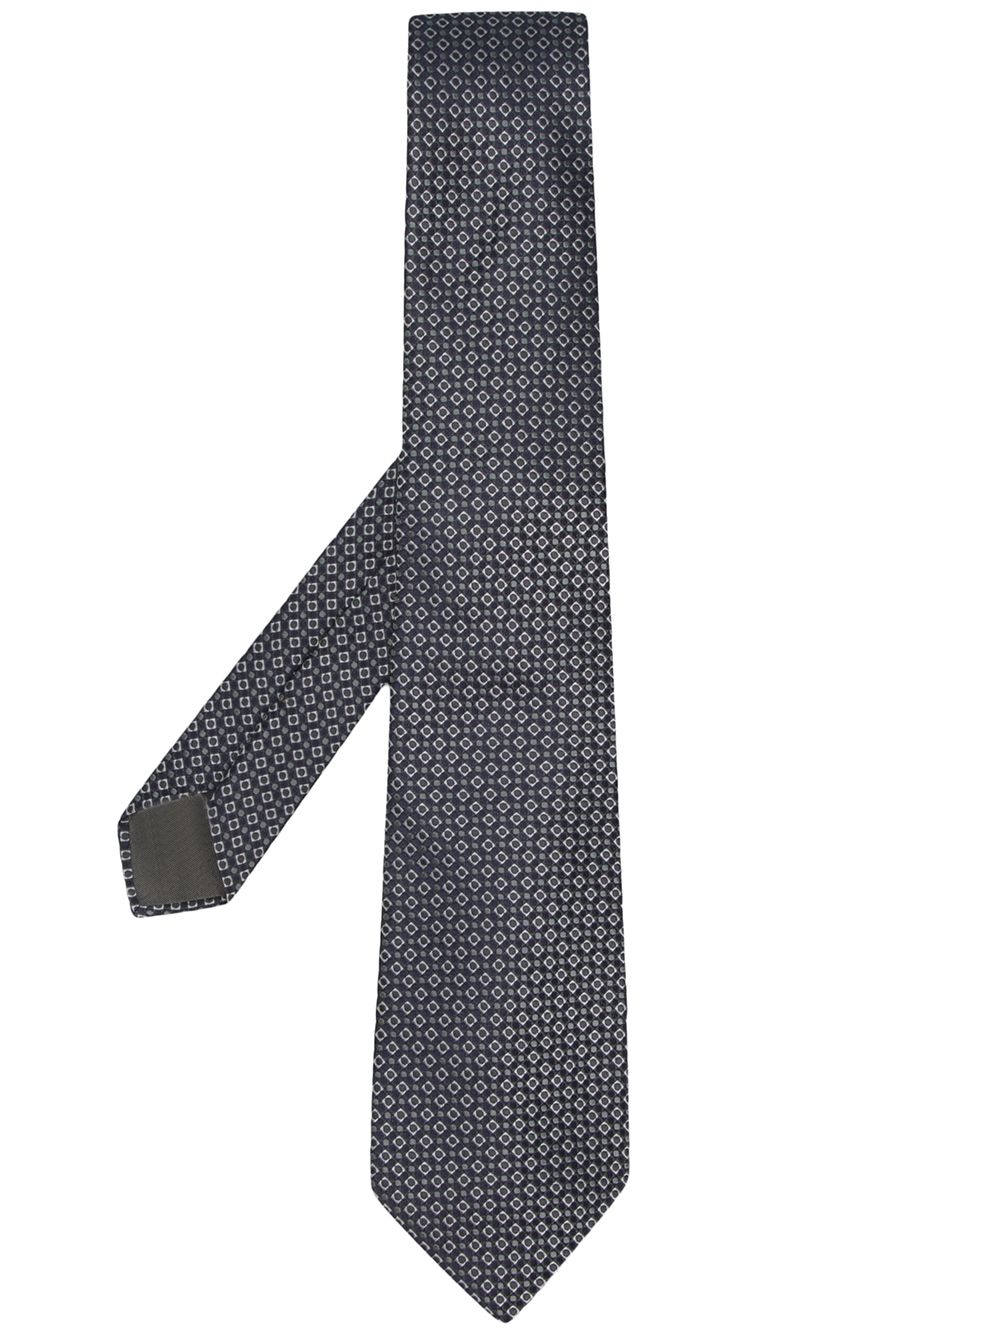 фото Canali галстук с геометричным узором